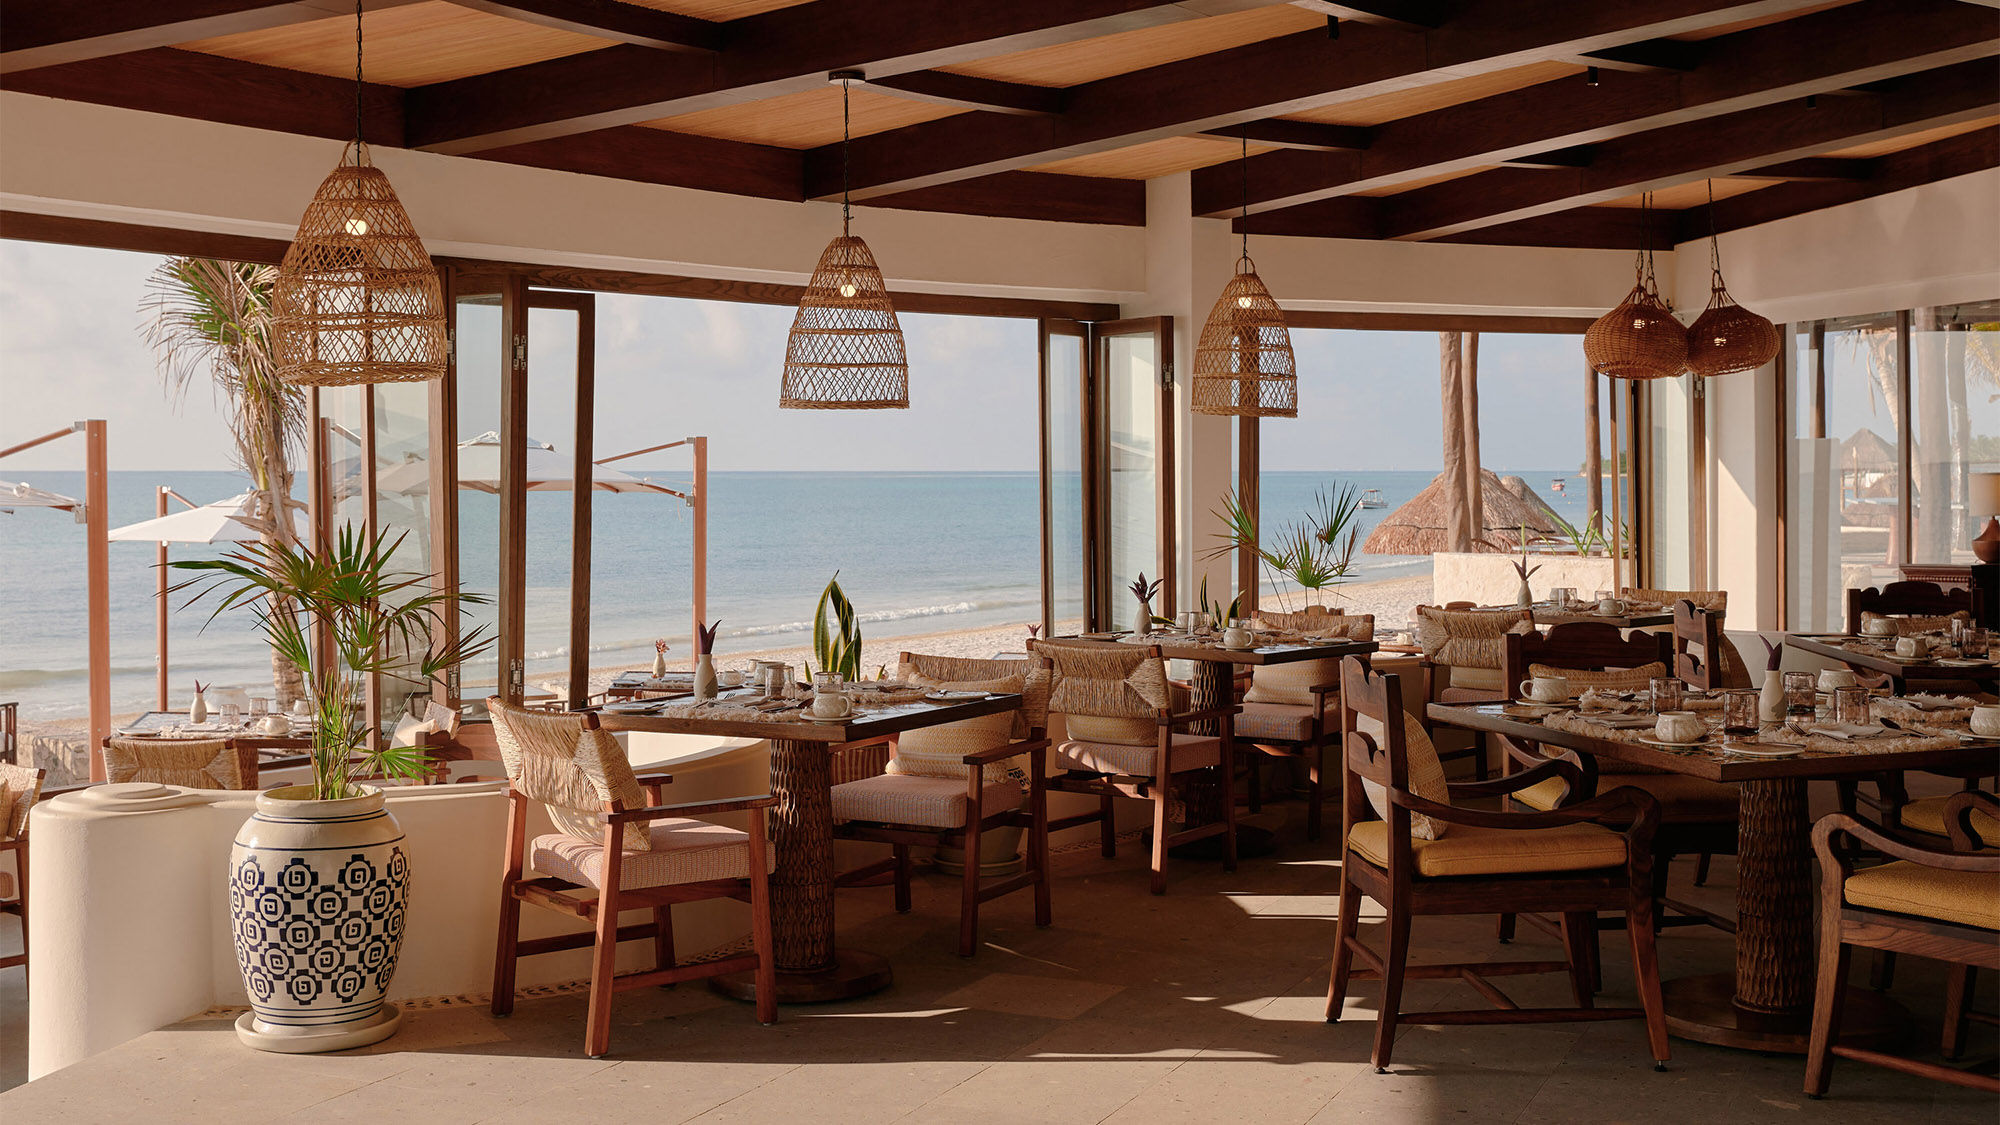 Beachfront dining at Maroma.